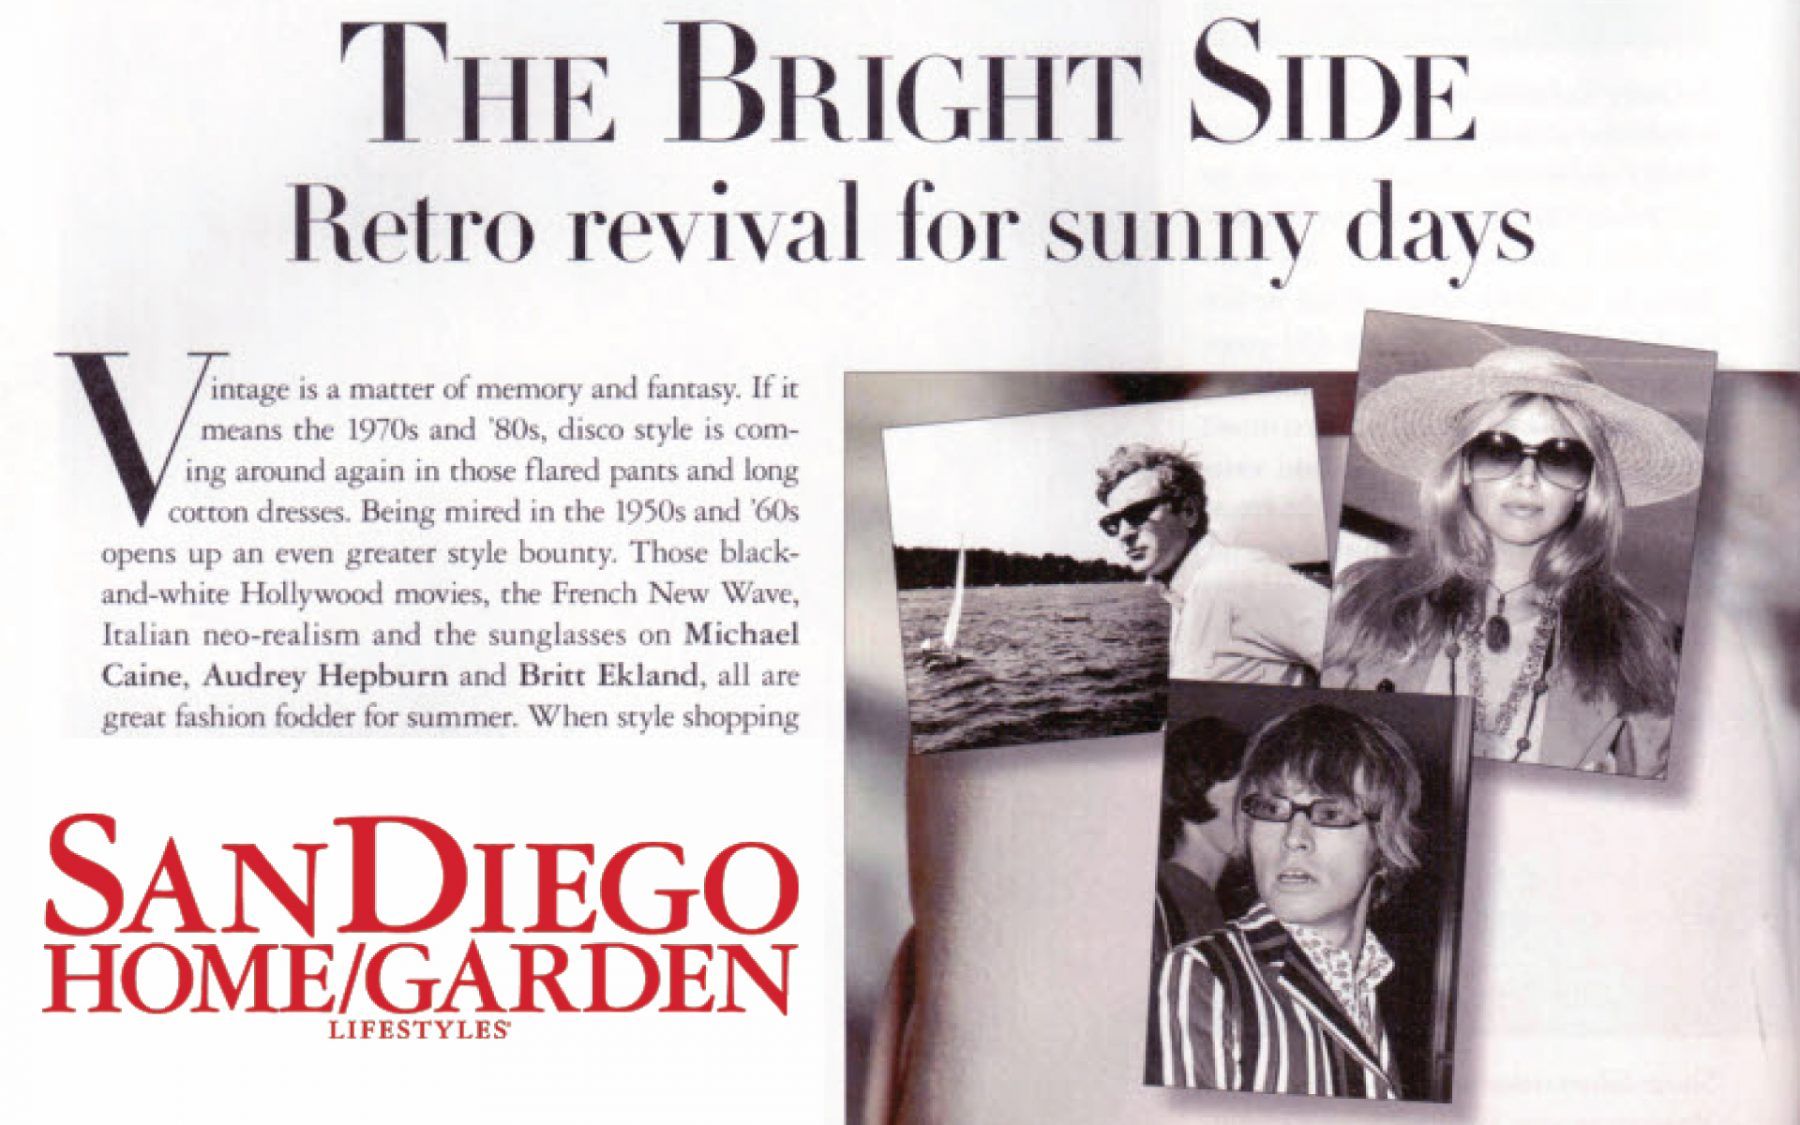 San Diego Home Gardens Lifestyles Magazine logo on an advertisement for retro sunglasses